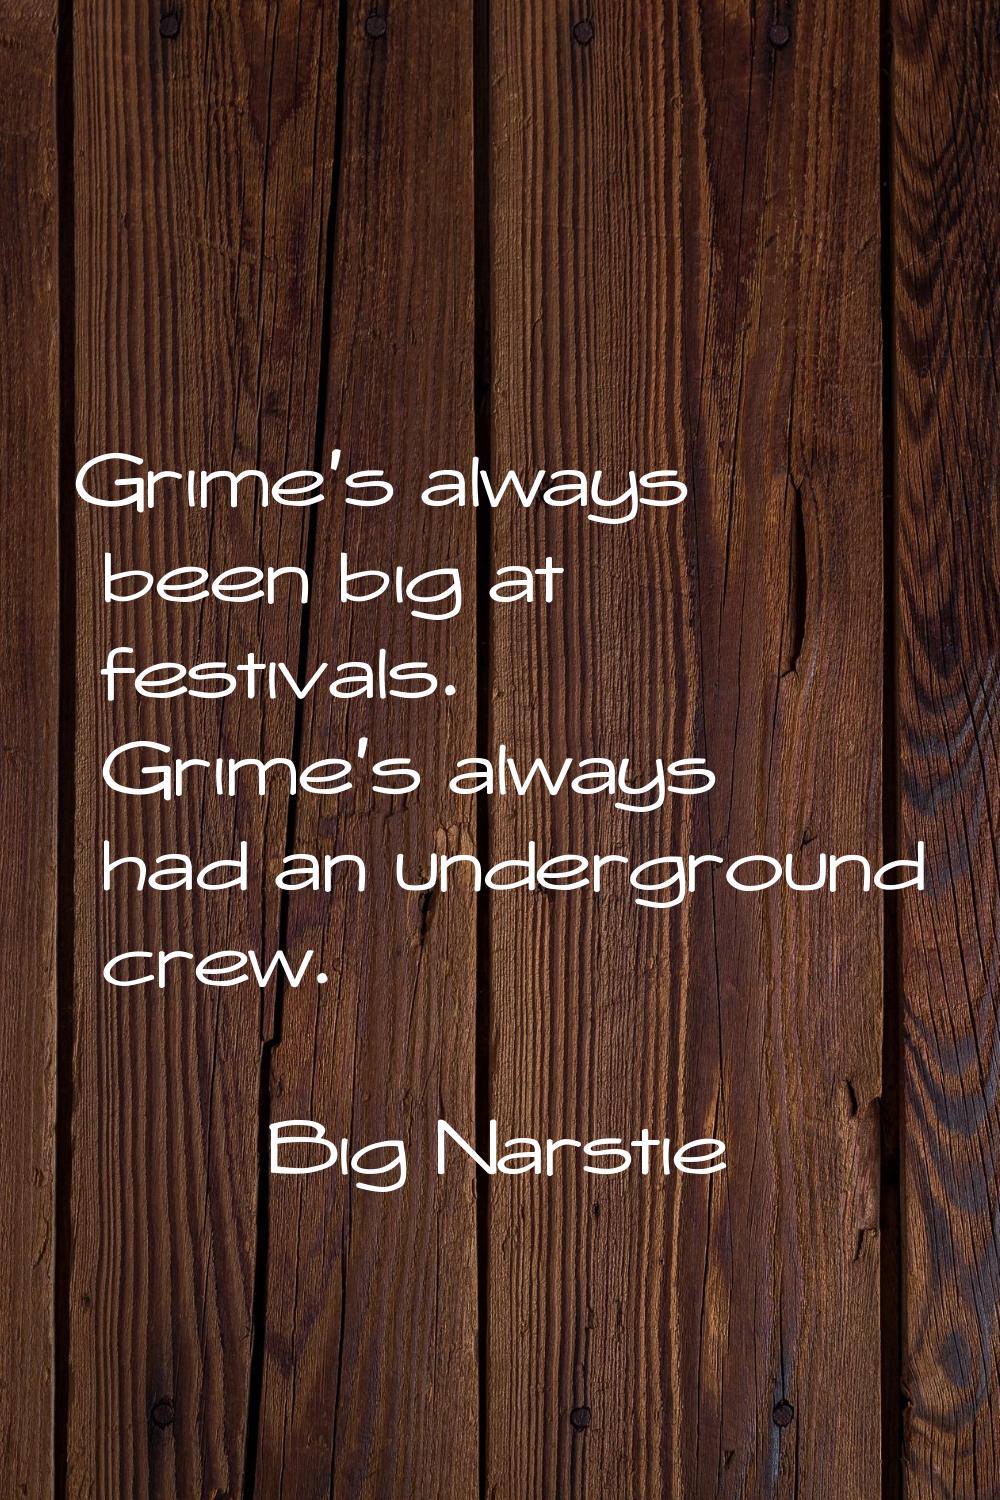 Grime's always been big at festivals. Grime's always had an underground crew.